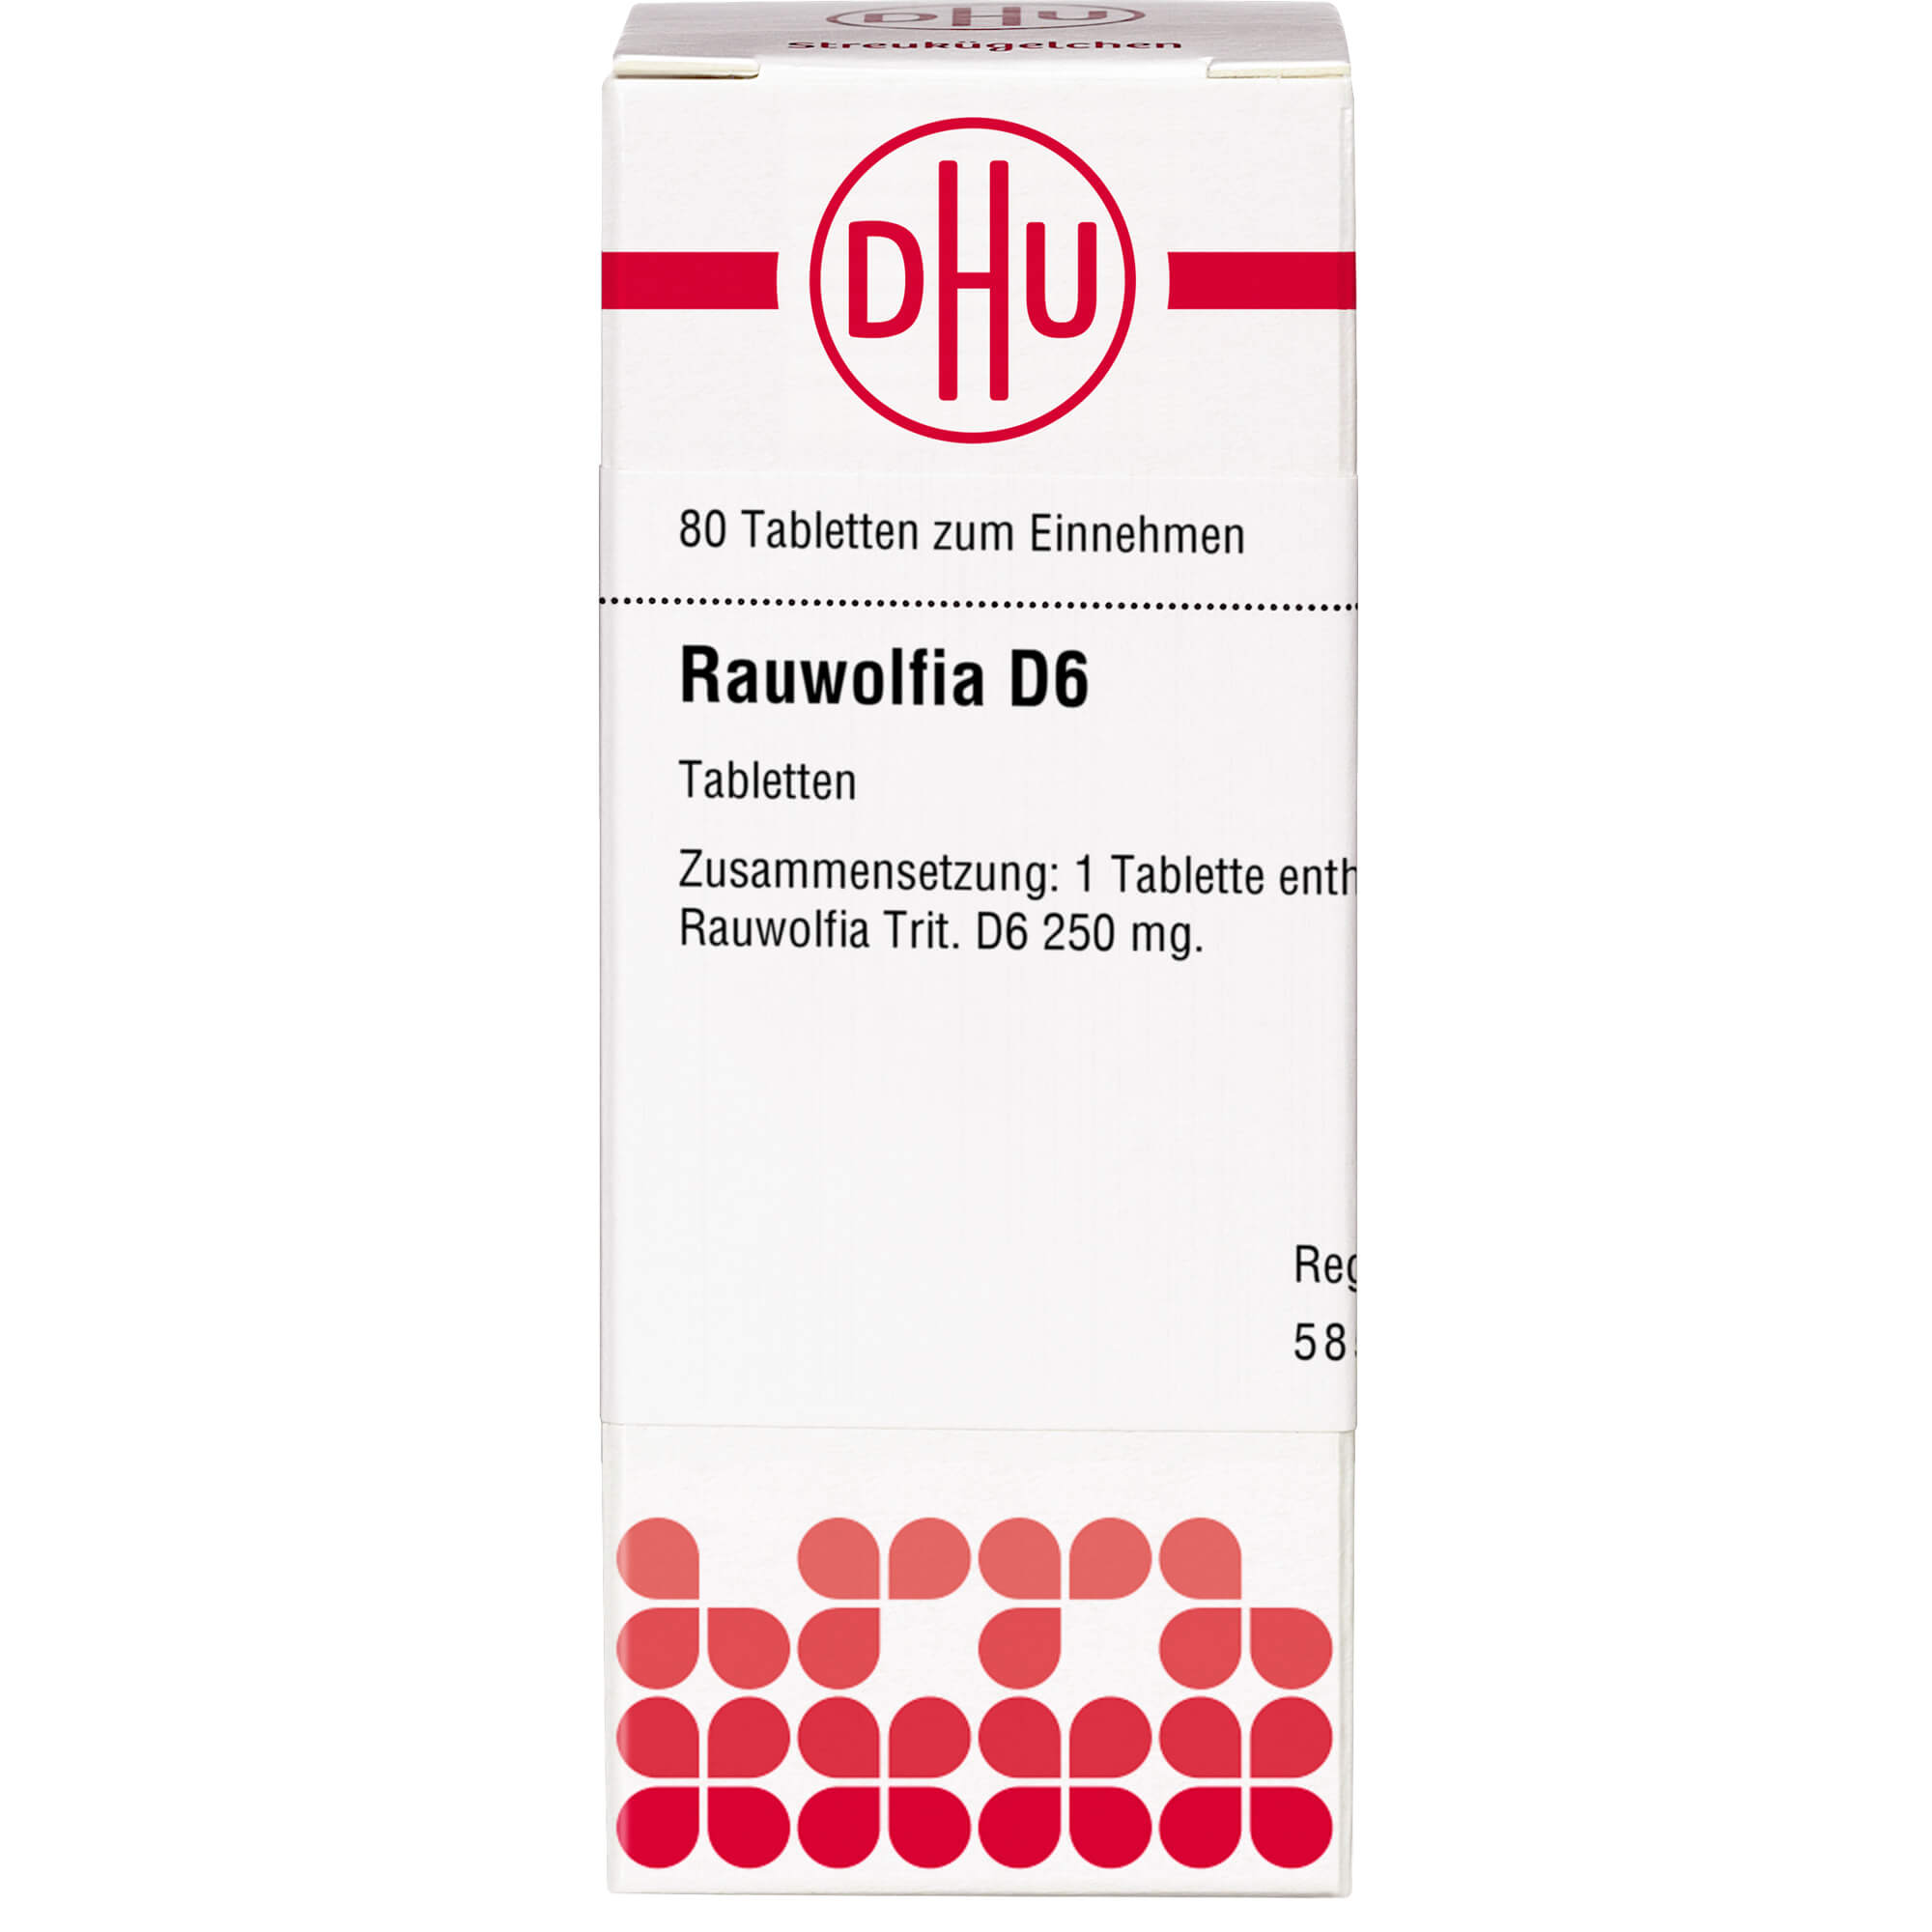 RAUWOLFIA D 6 Tabletten